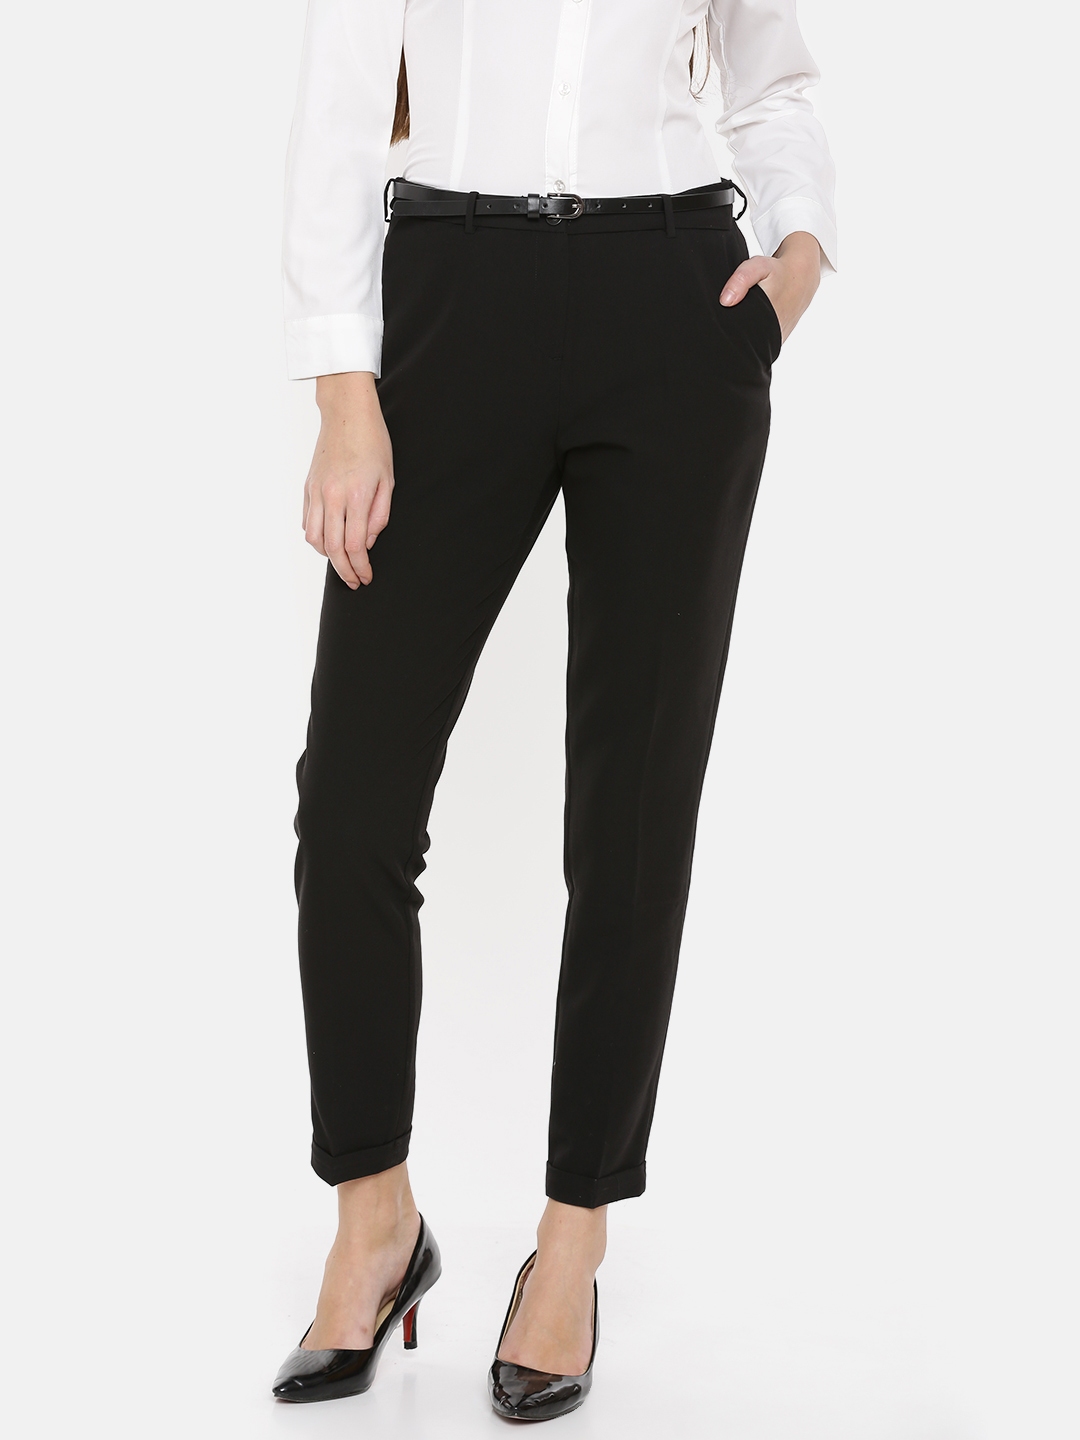 Buy Men Black Solid Slim Fit Formal Trousers Online - 783230 | Peter England